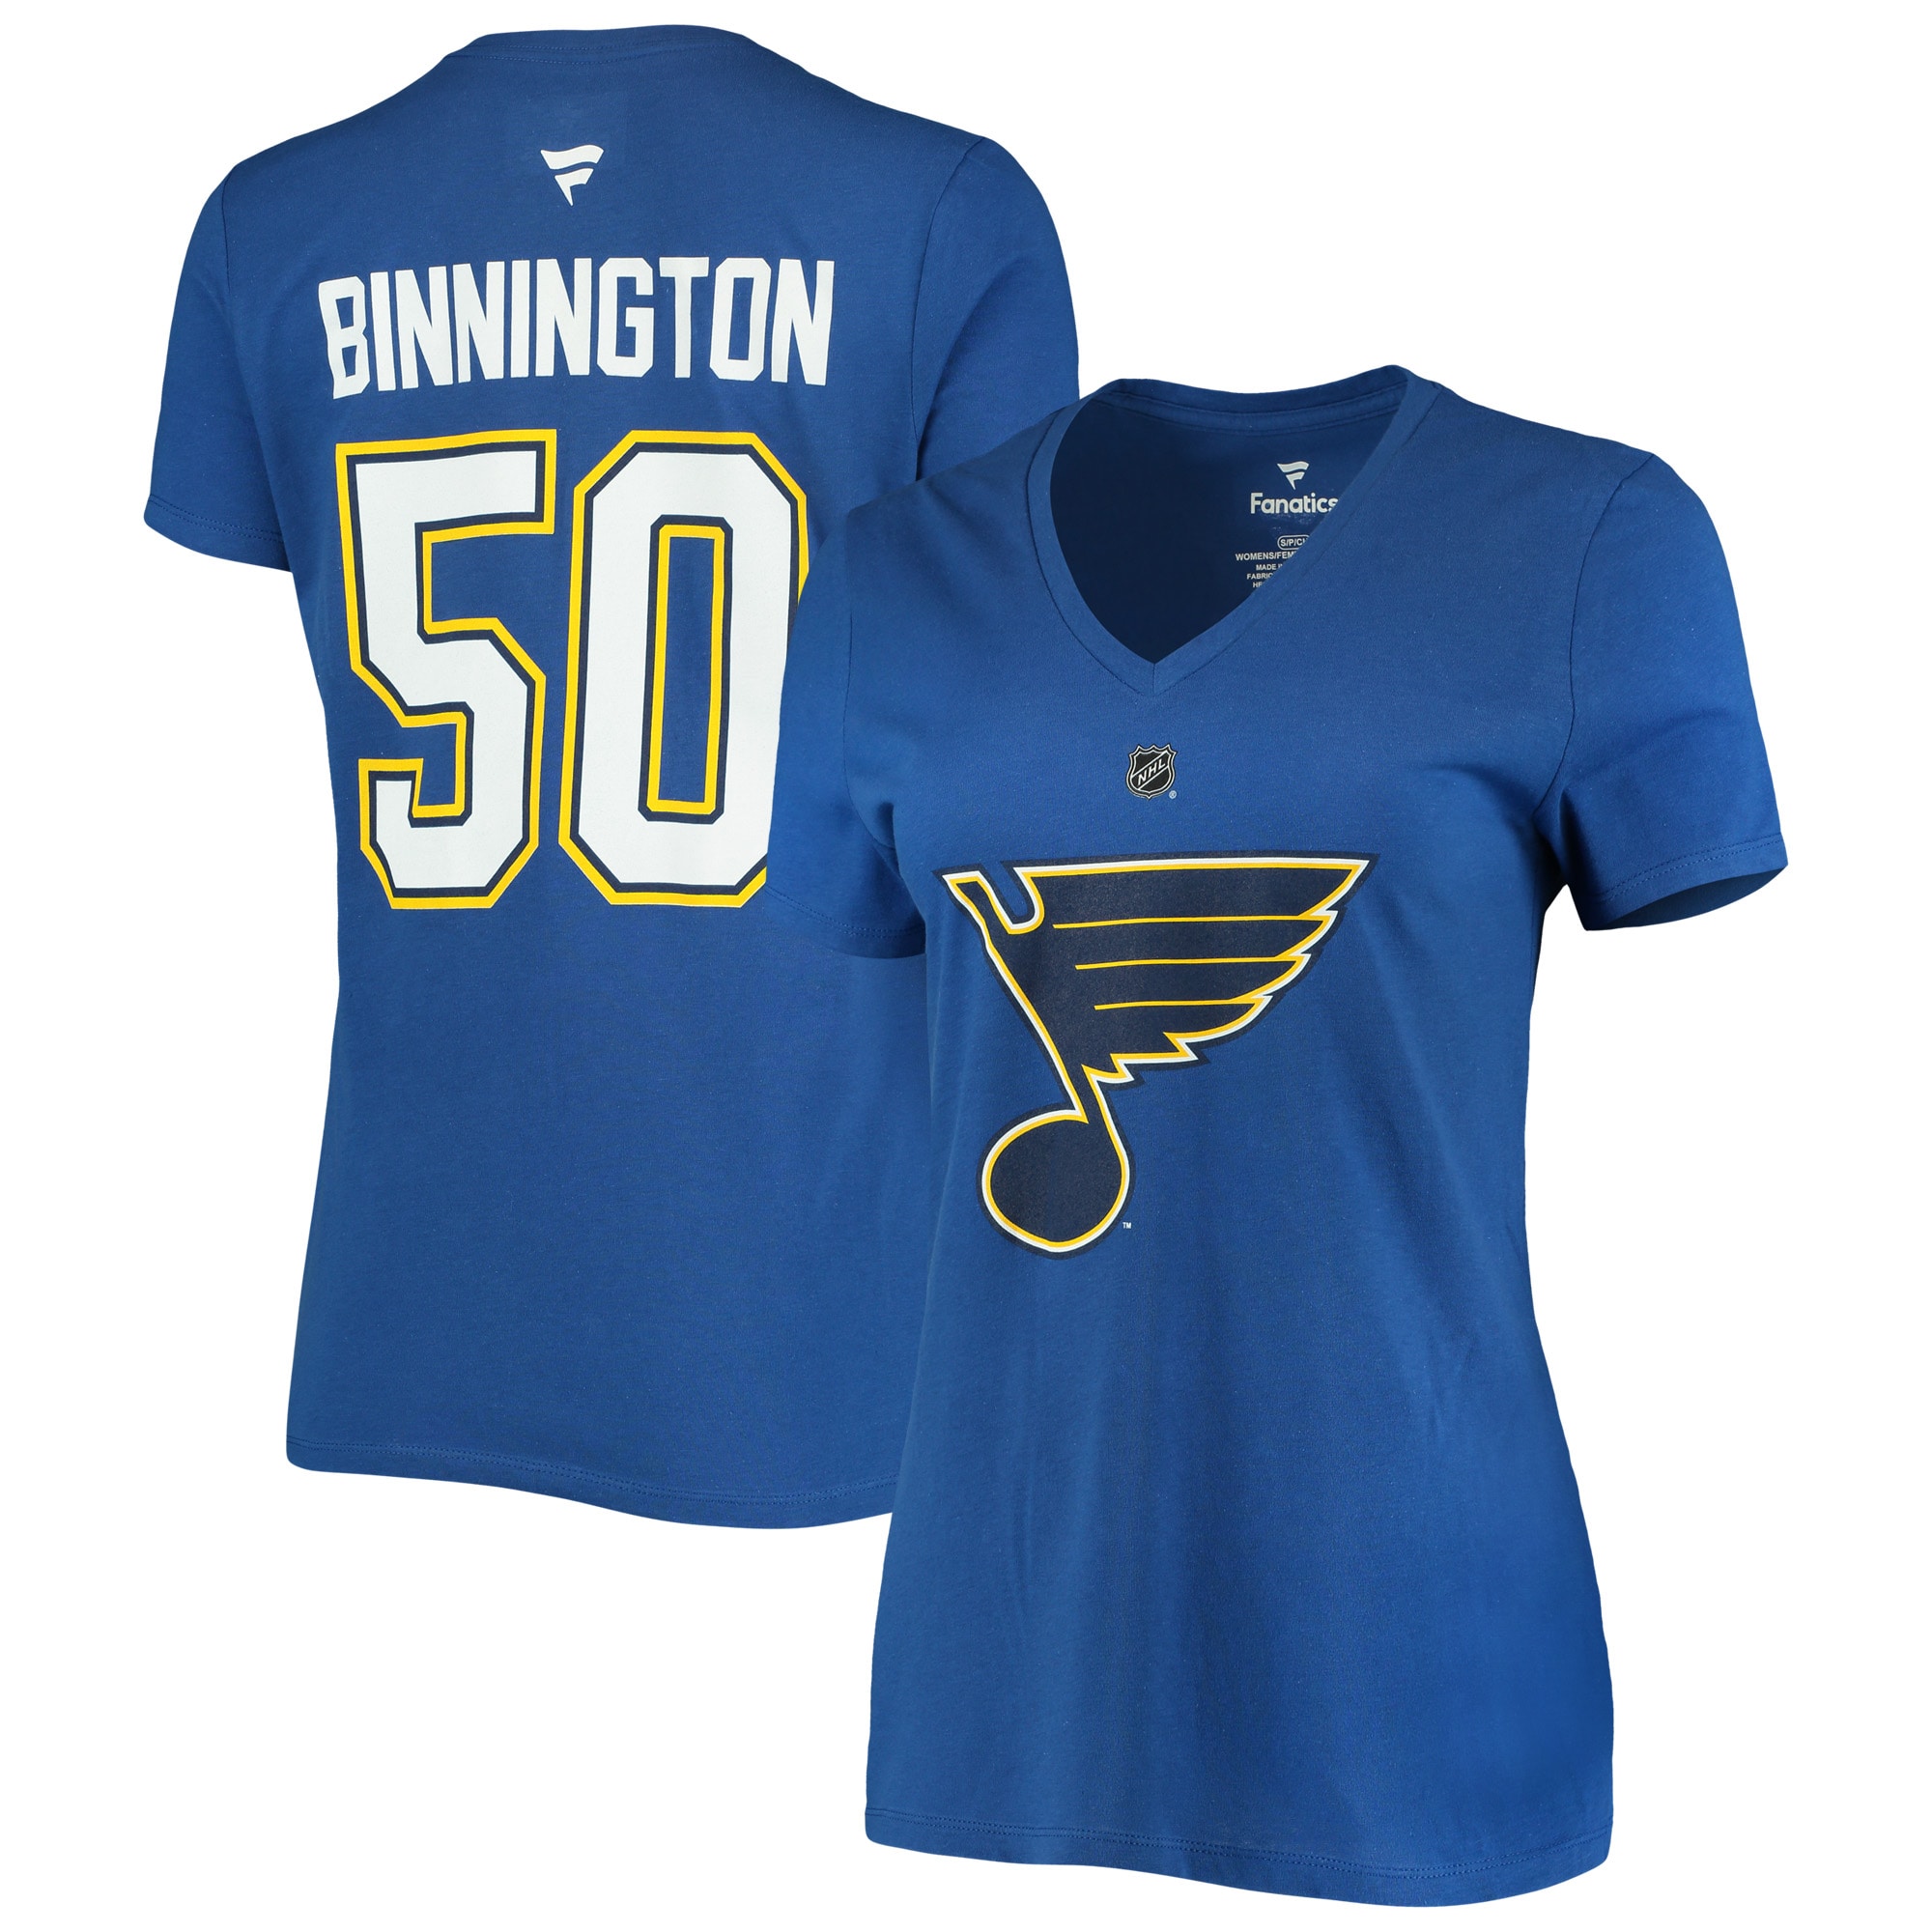 Women's Fanatics Branded Jordan Binnington Blue St. Louis Blues Team Authentic Stack Name & Number V-Neck T-Shirt - image 1 of 3